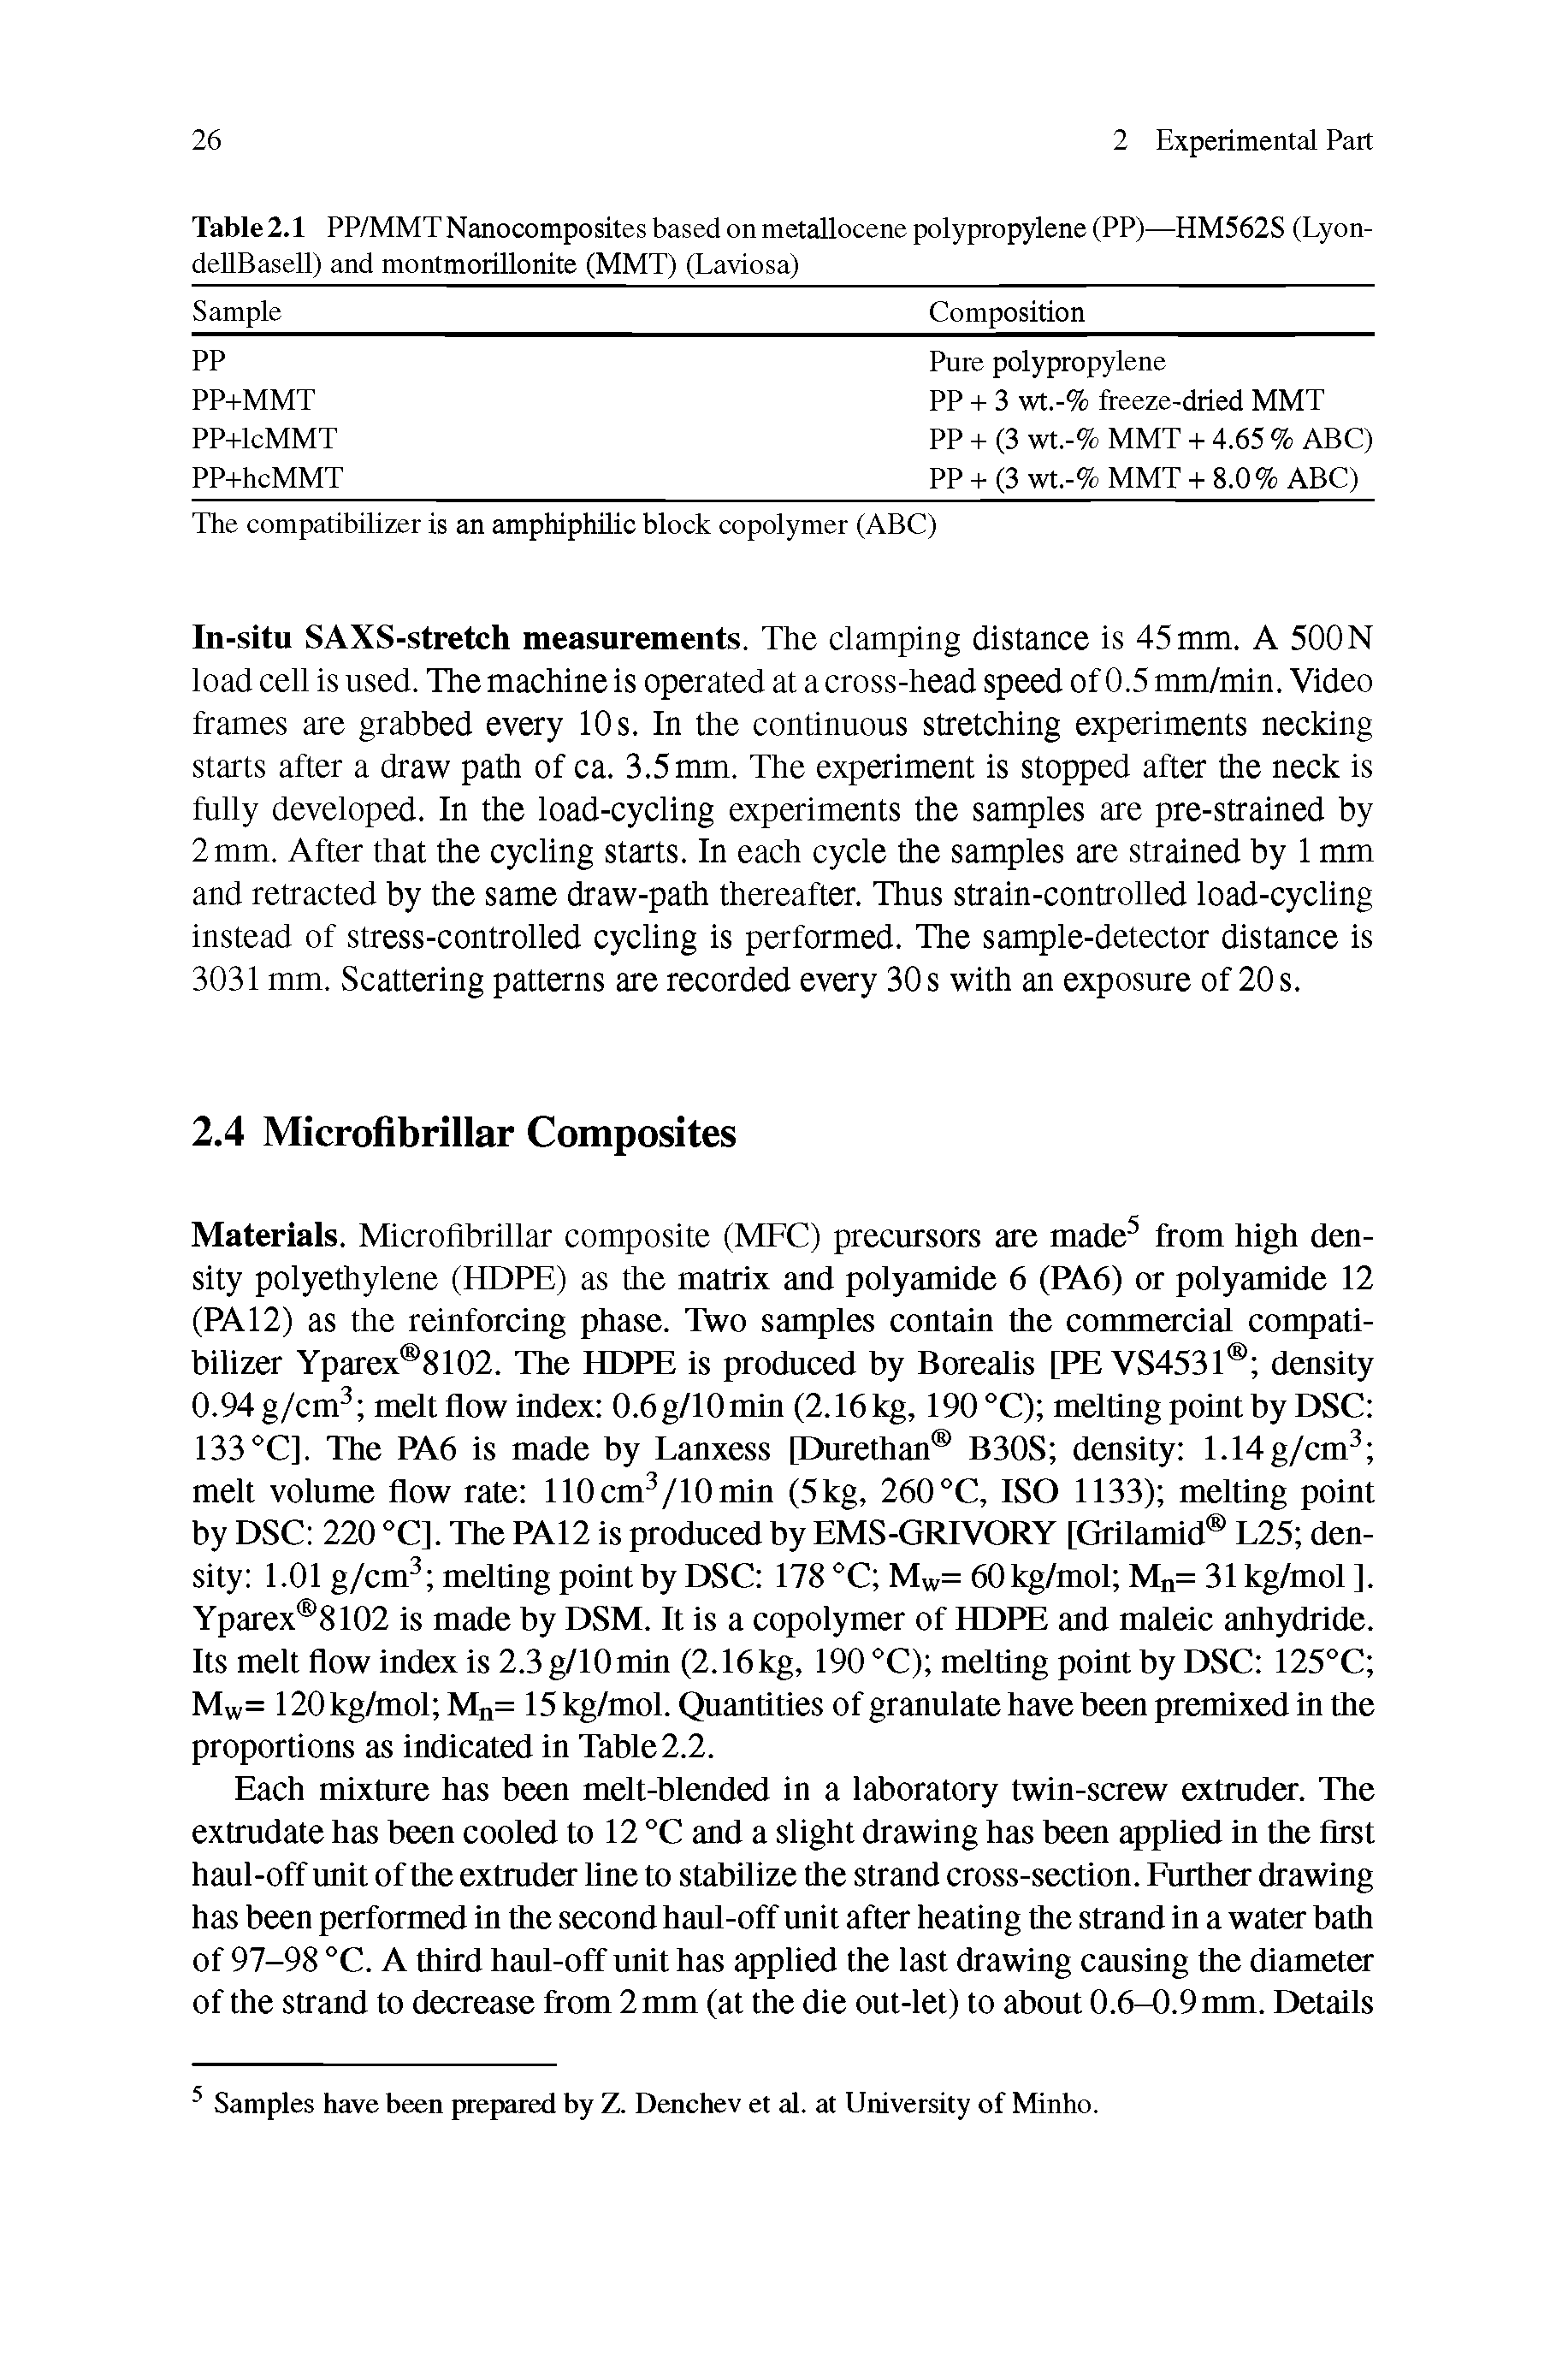 Table 2.1 PP/MMT Nanocomposites based on metallocene polypropylene (PP)—HM562S (Lyon-deUBaseU) and montmoriUonite (MMT) (Laviosa) ...